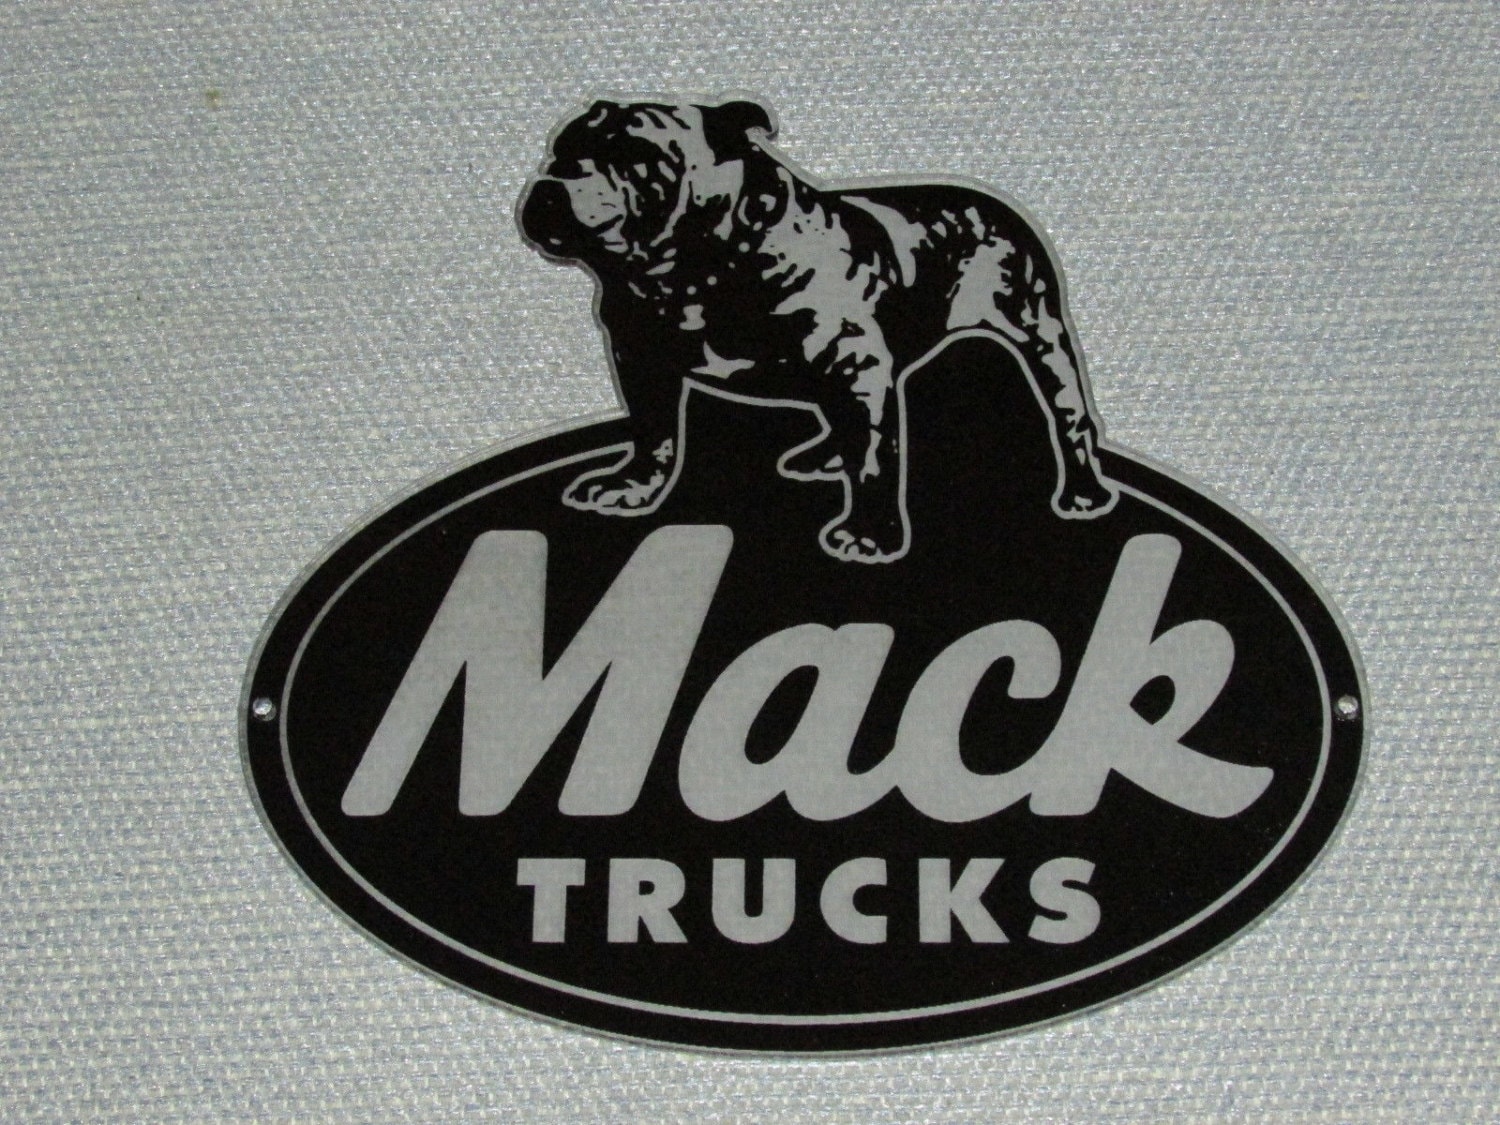 Truck with bulldog logo